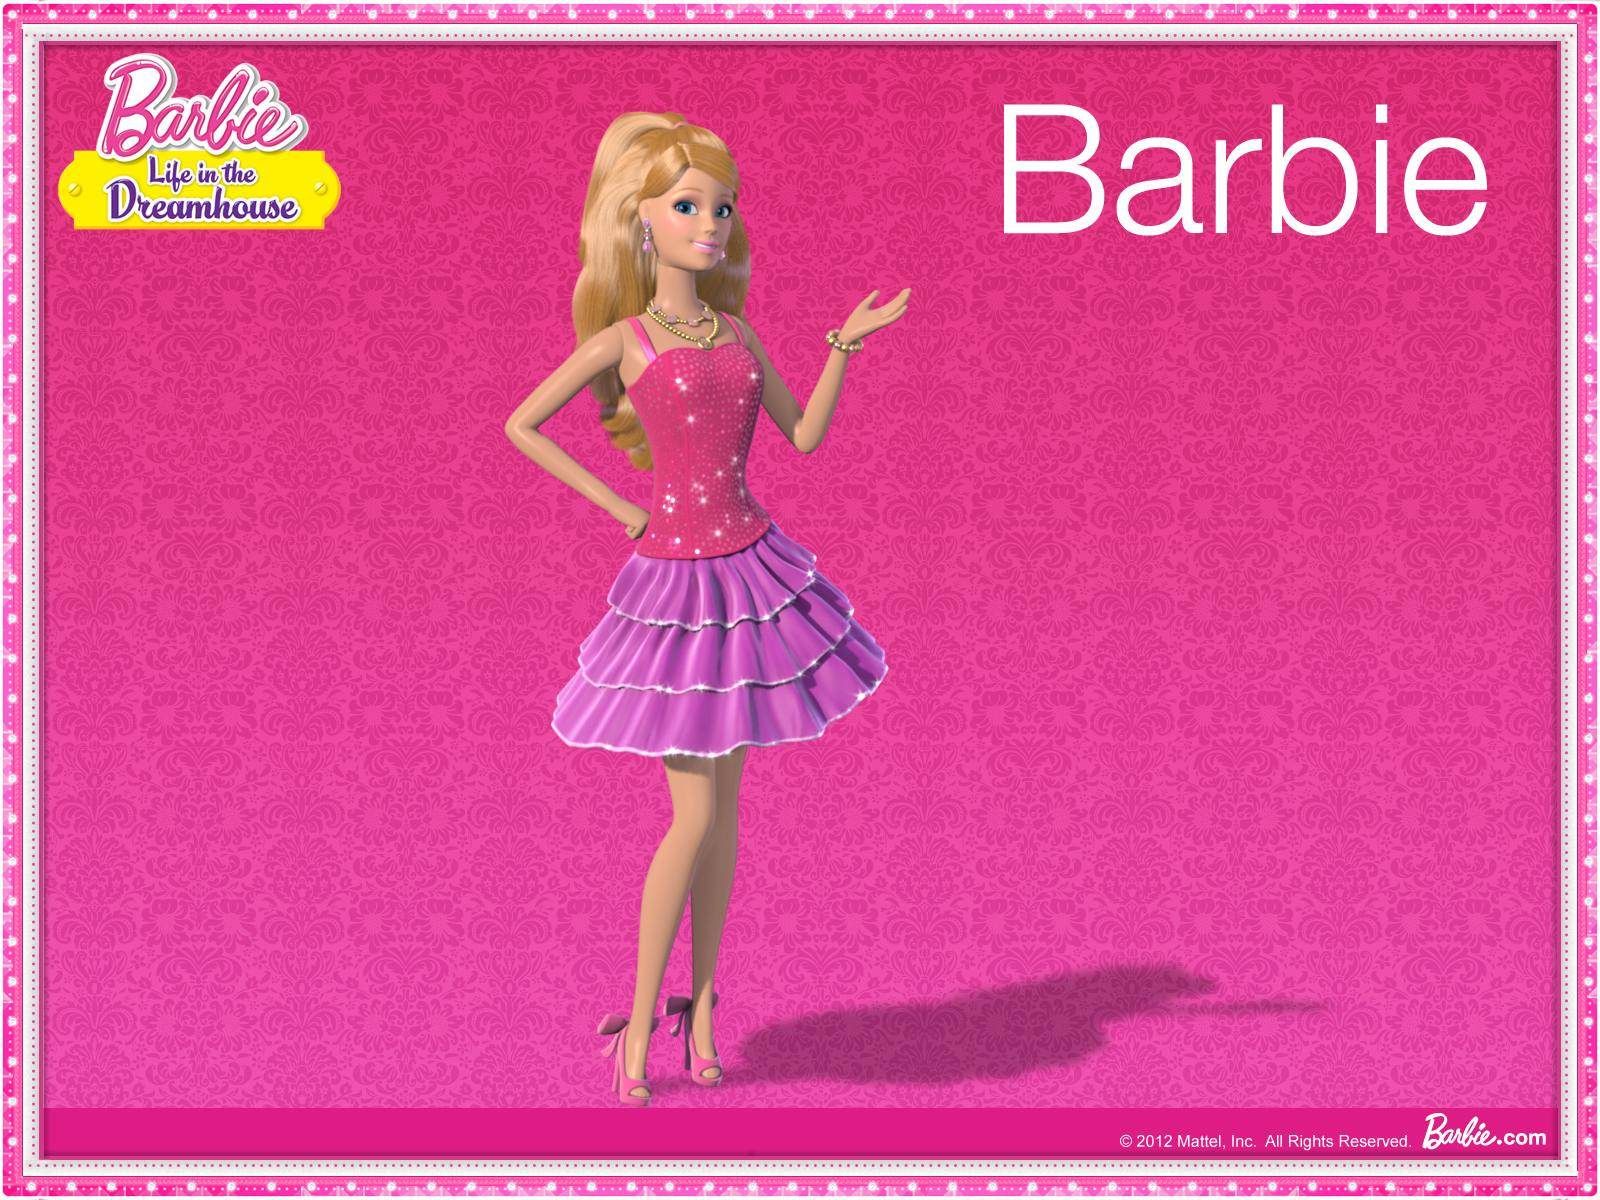 barbie live wallpaper,pink,doll,barbie,toy,magenta